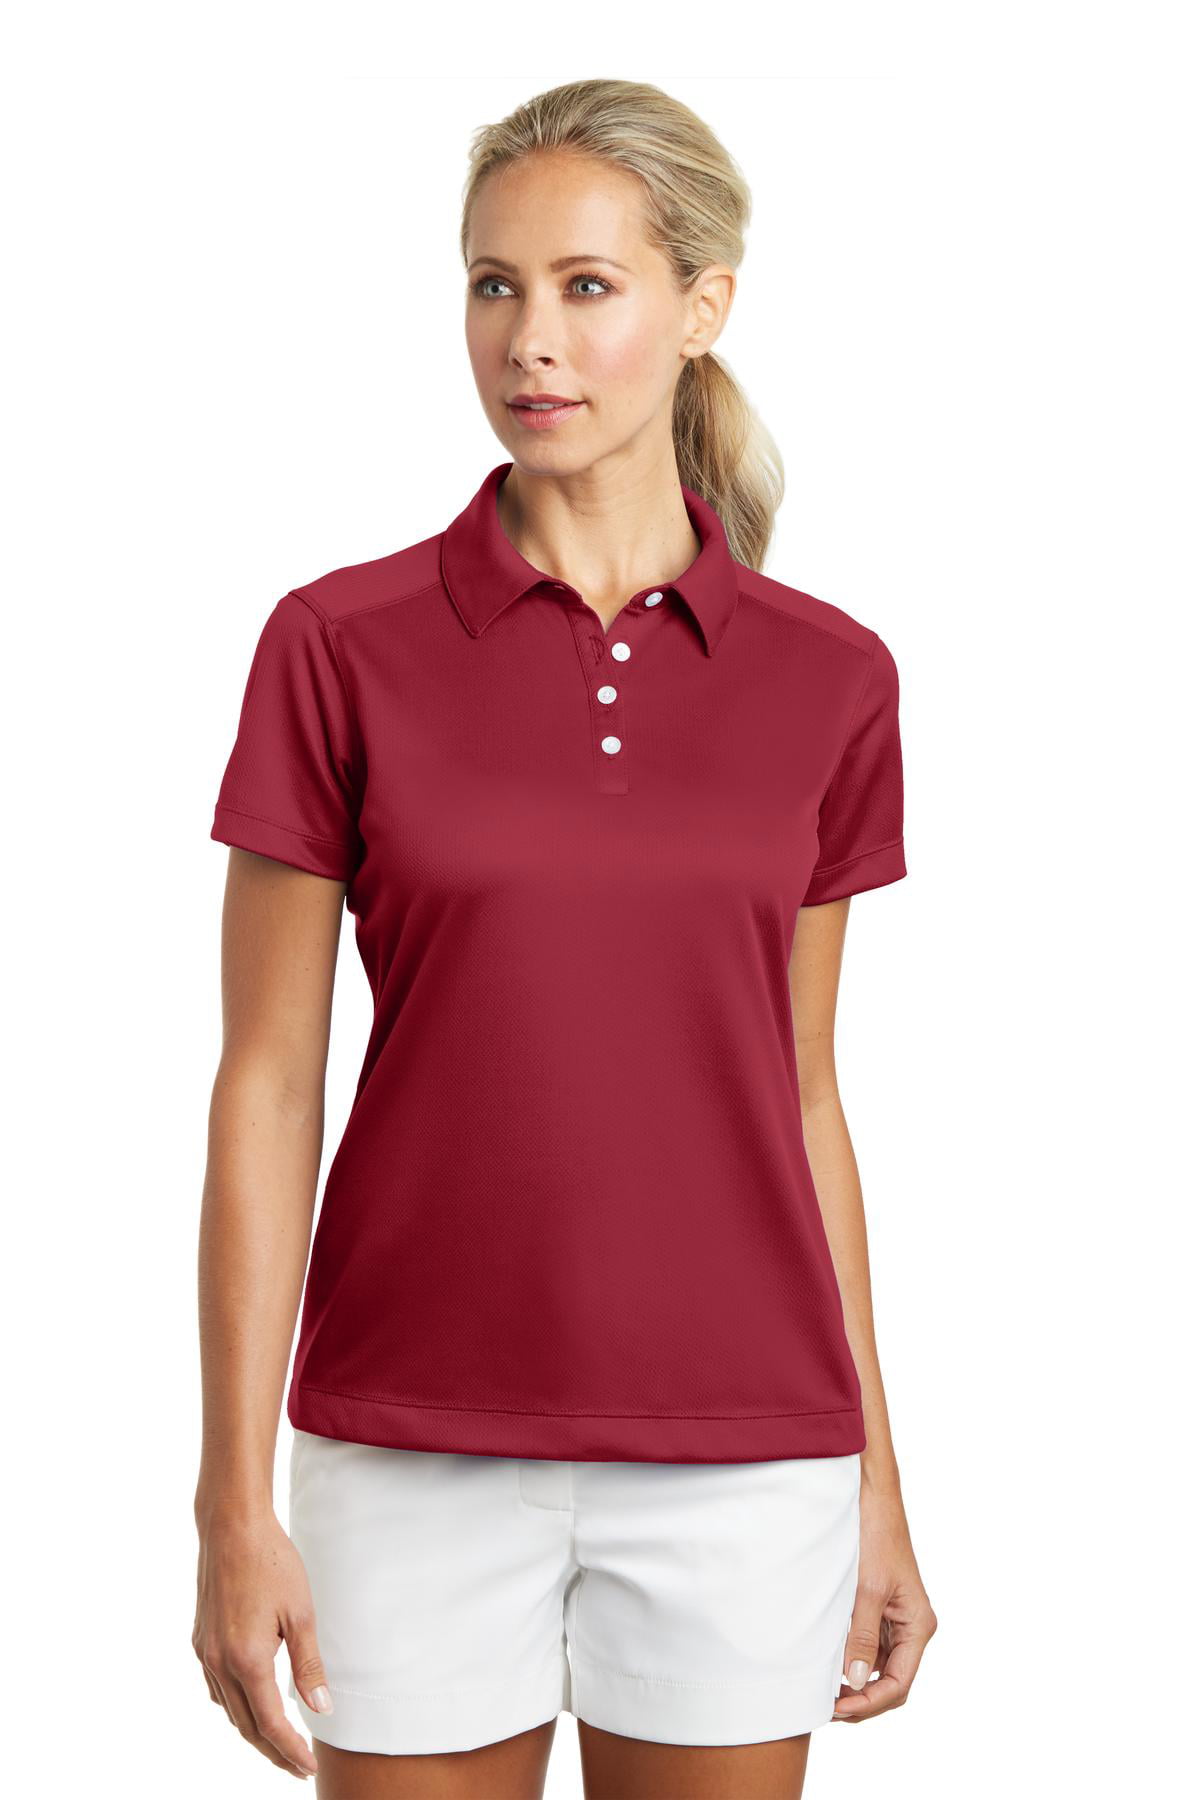 Nike Golf - Ladies Dri-Fit Pebble Texture Polo. 354064 - Walmart.com